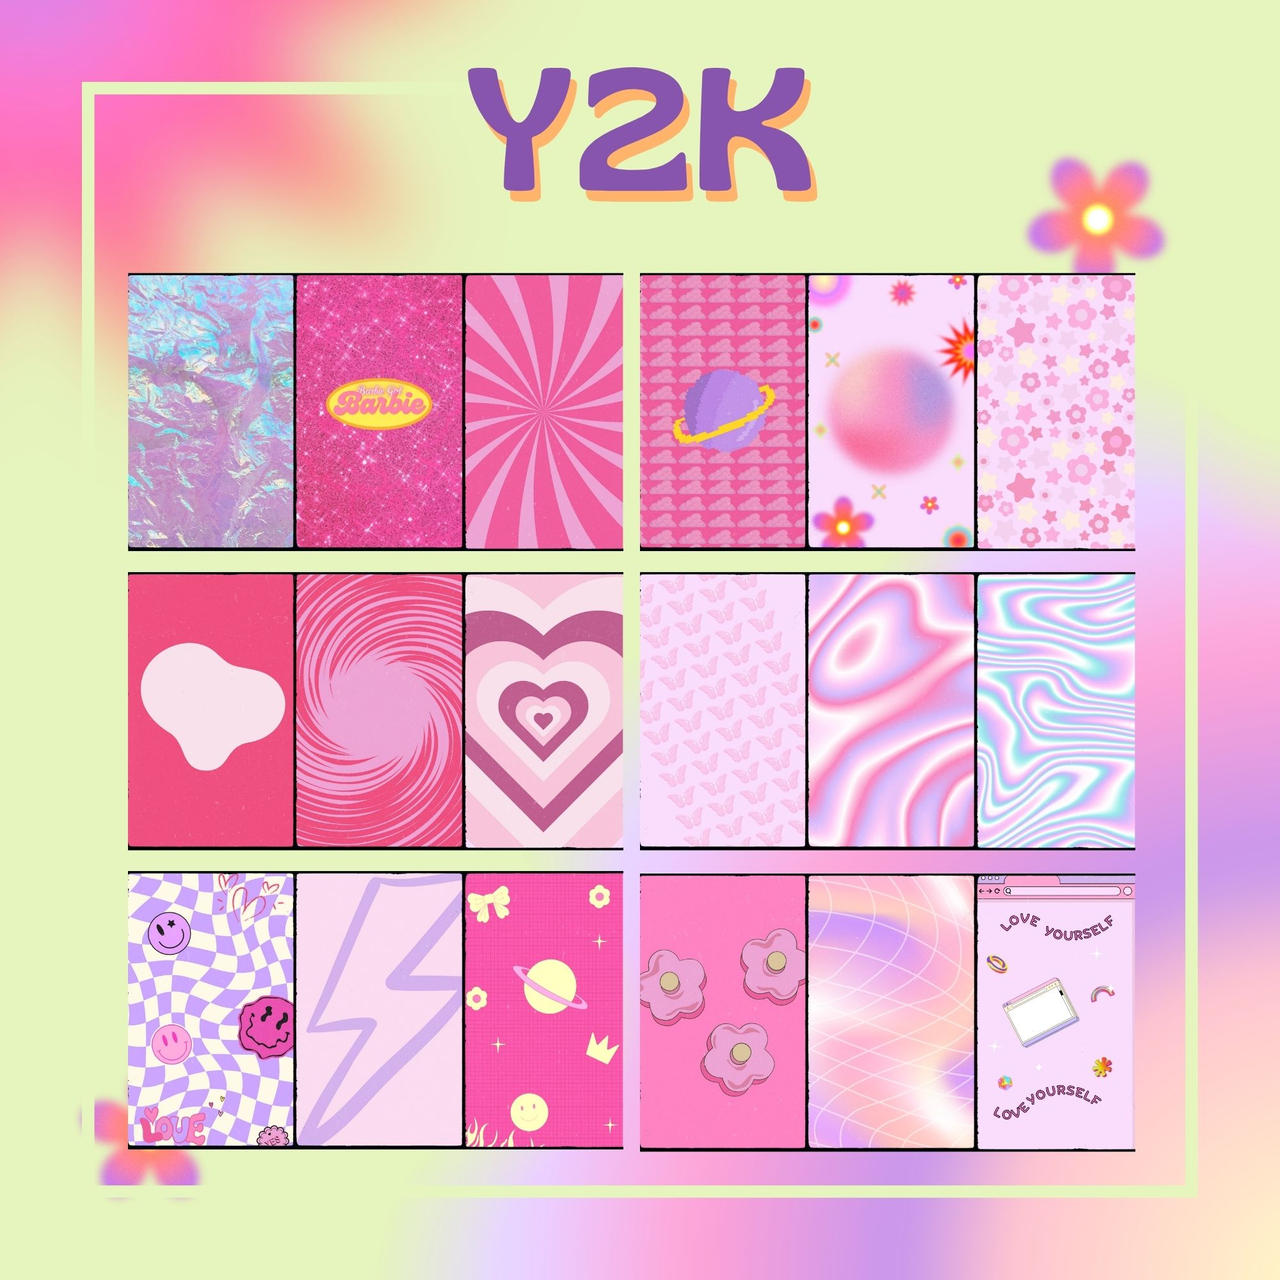 Y2k wallpaper by hotrnail on DeviantArt